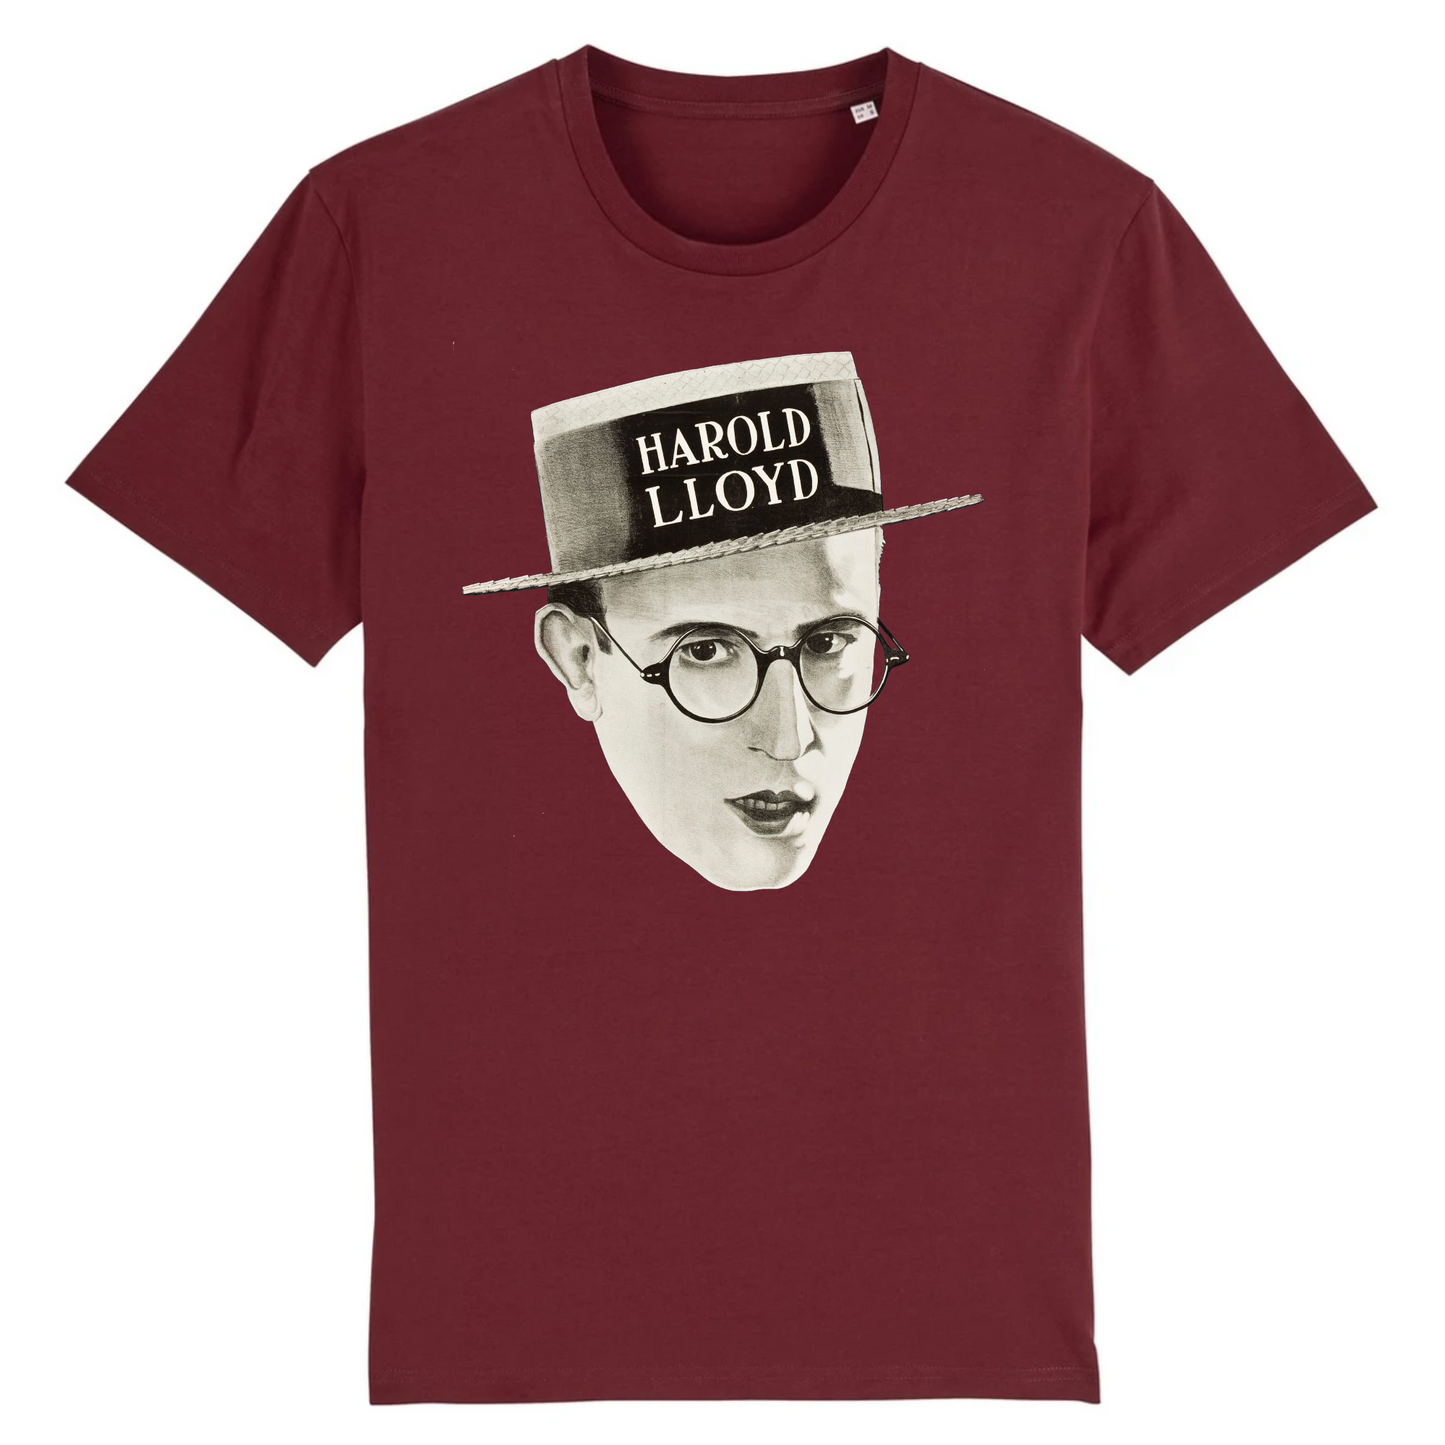 Hooray for Harold Lloyd - Organic Cotton T-Shirt